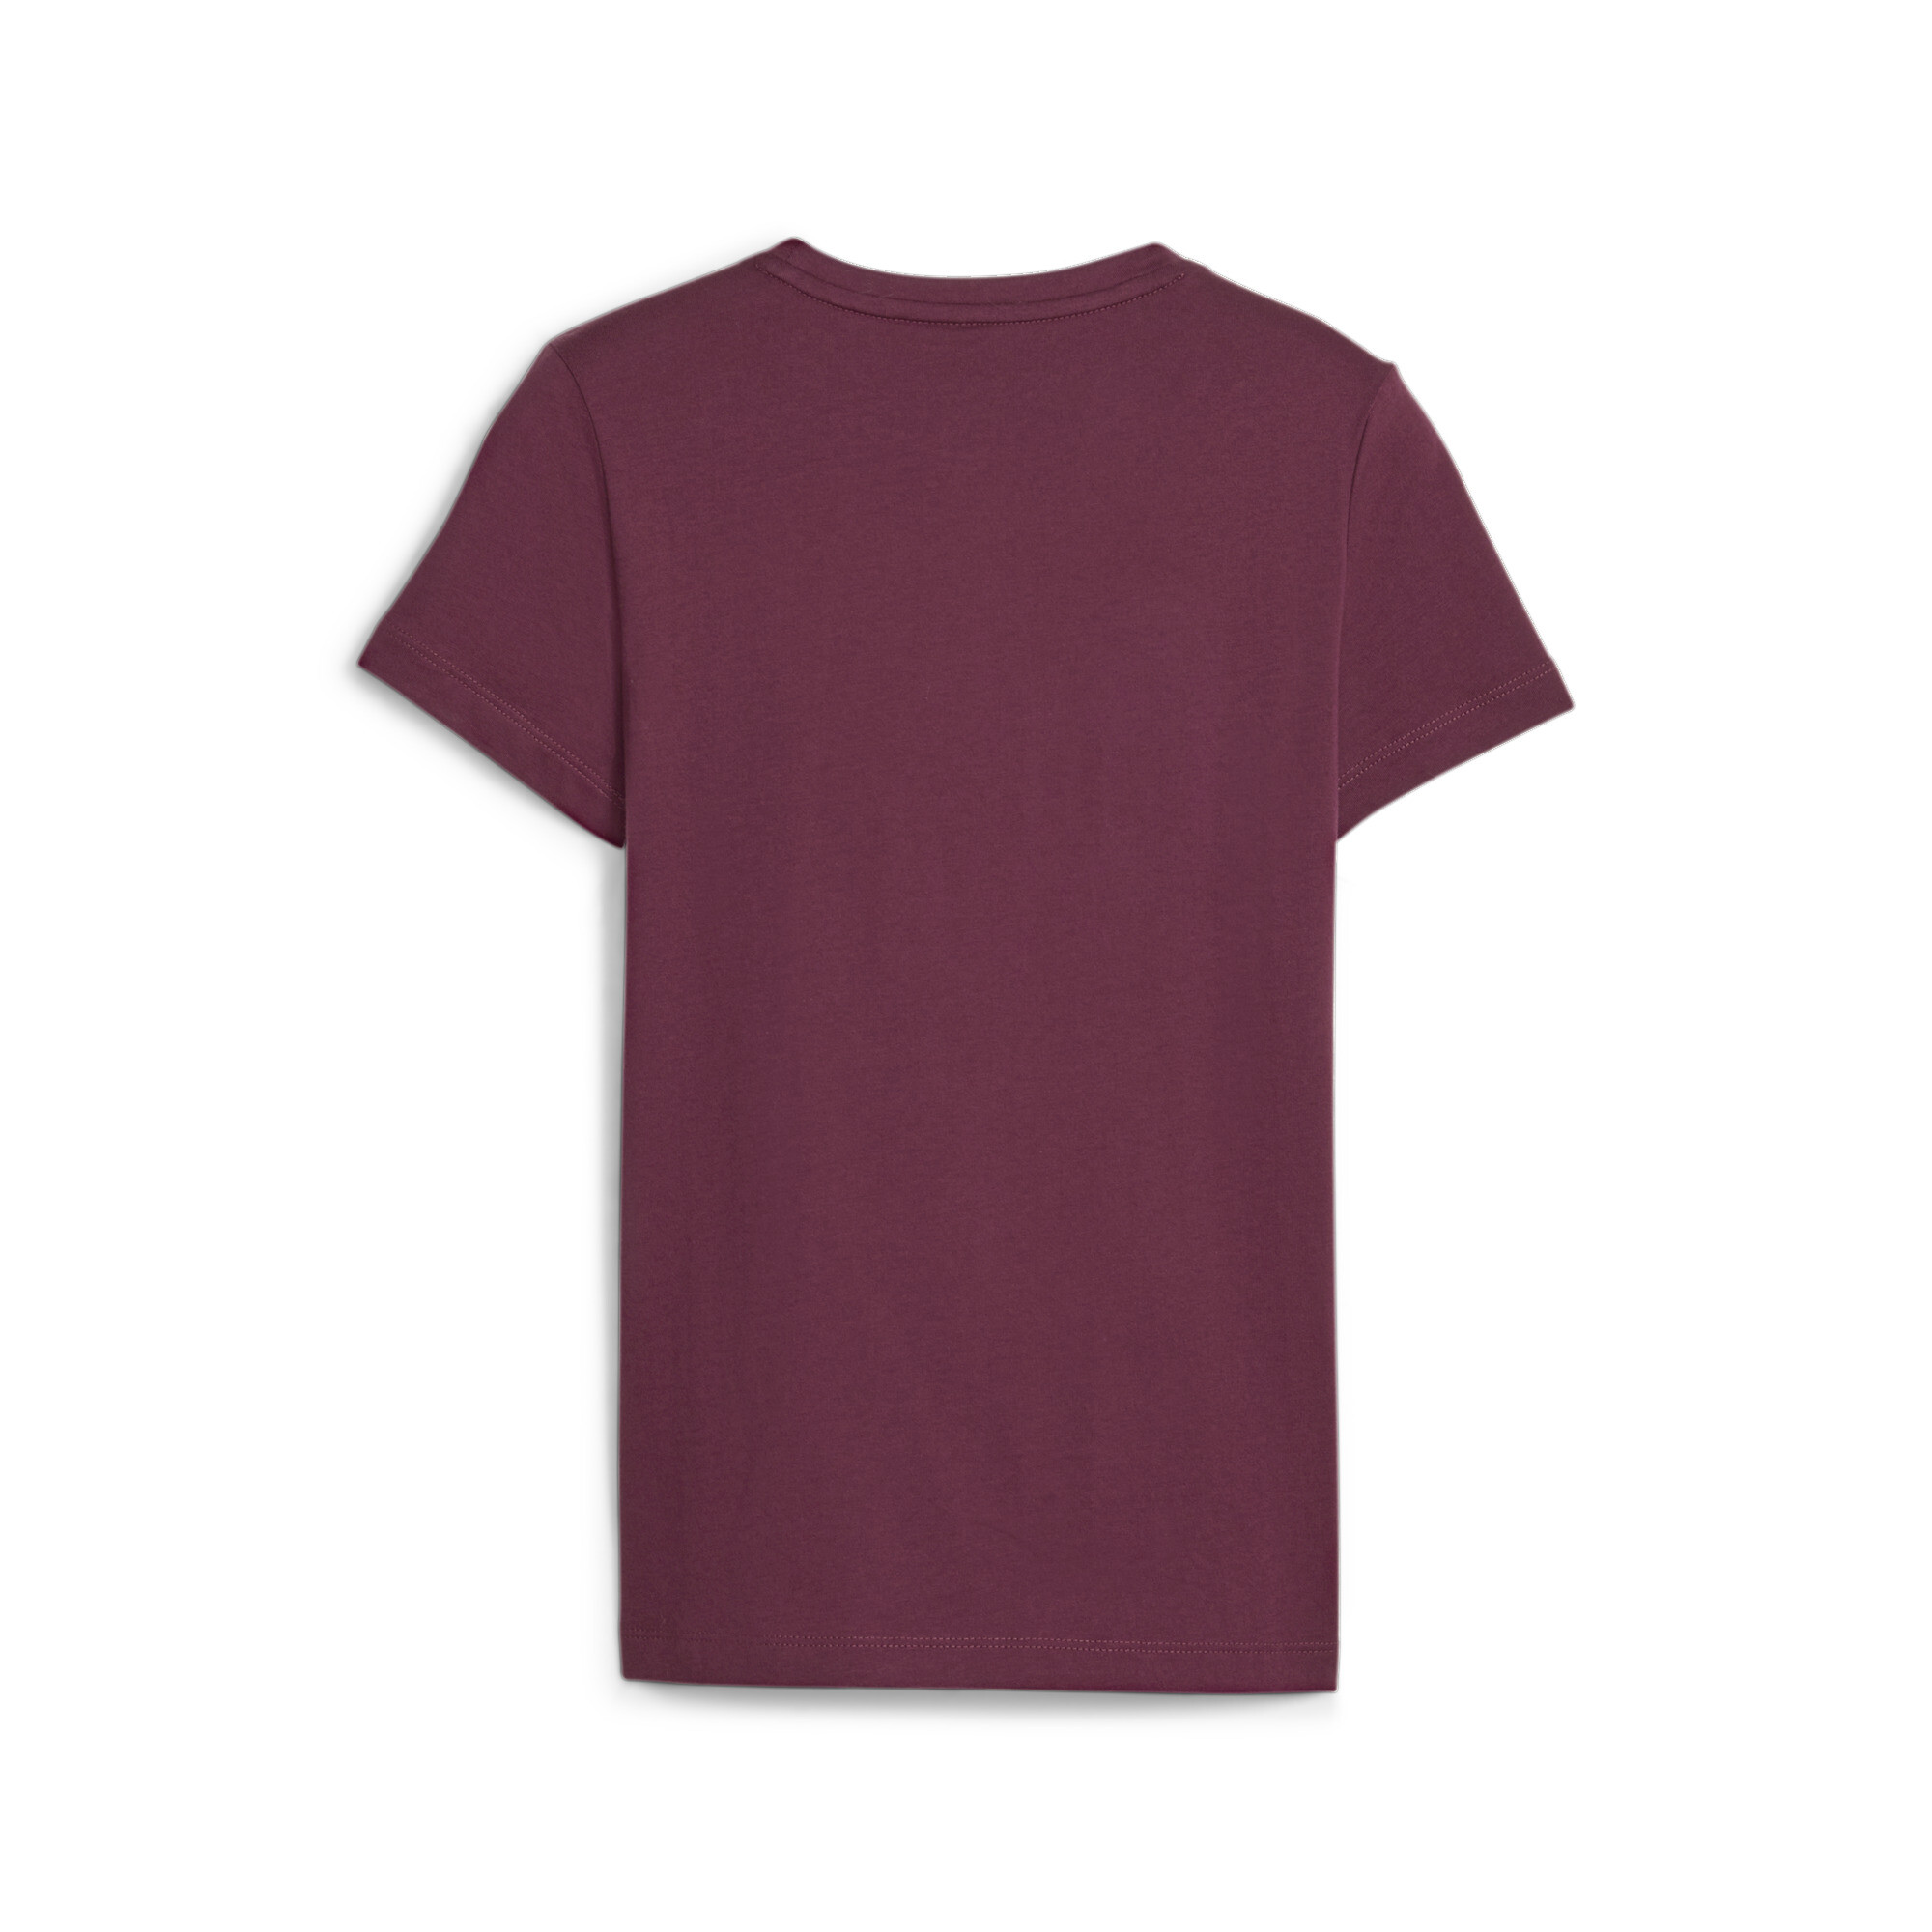 Women's Puma Essentials Logo Youth T-Shirt, Red, Size 5-6Y, Clothing